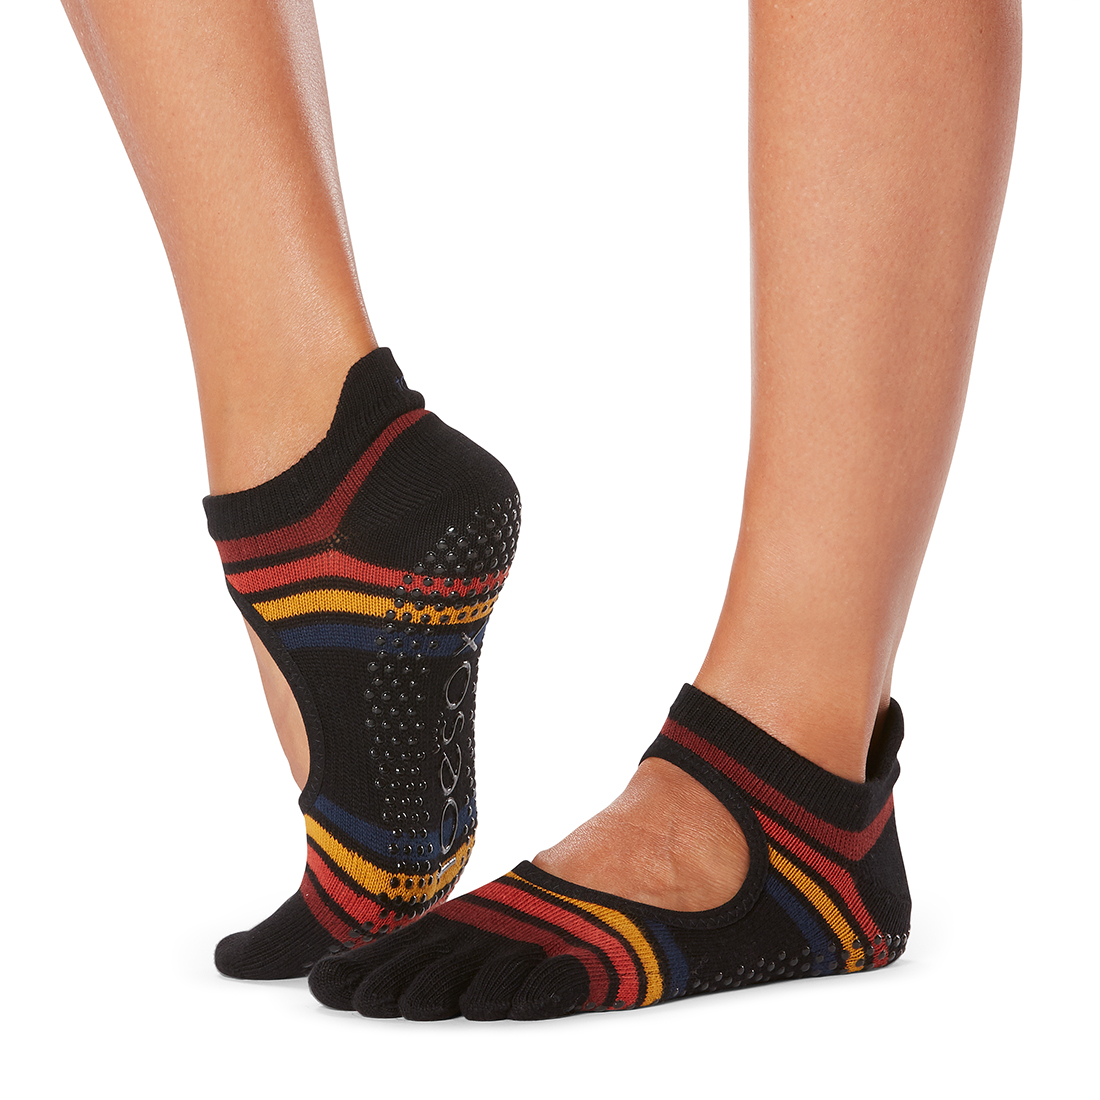 Toesox Elle Half Toe  Womens knee high socks, Fashion socks, Lace socks